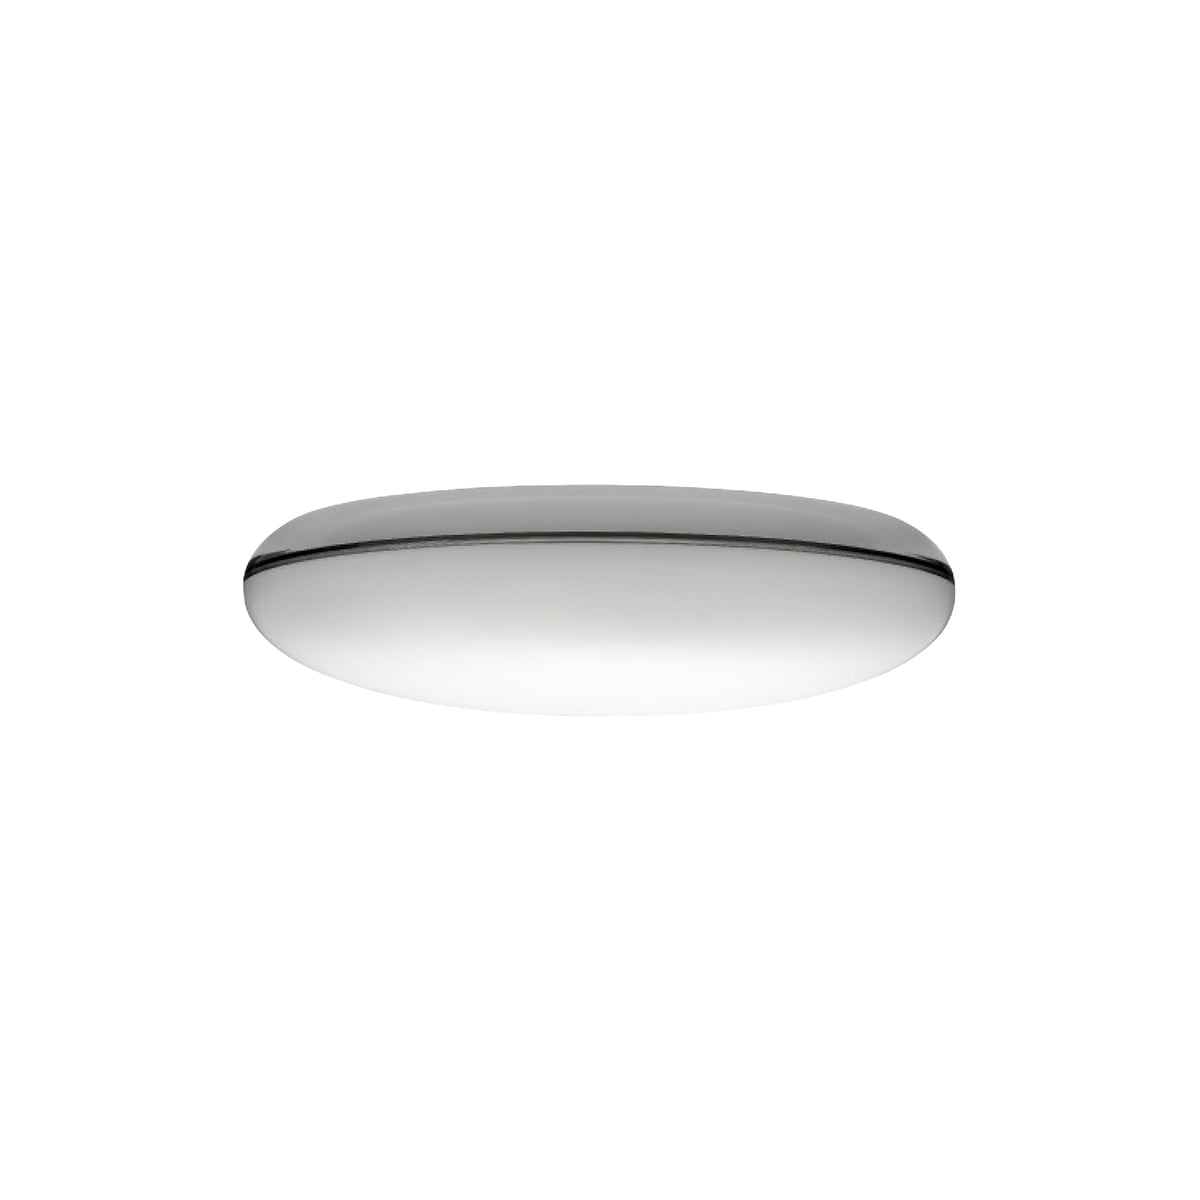 Silverback LED fra Louis Poulsen fås i interiørshoppen